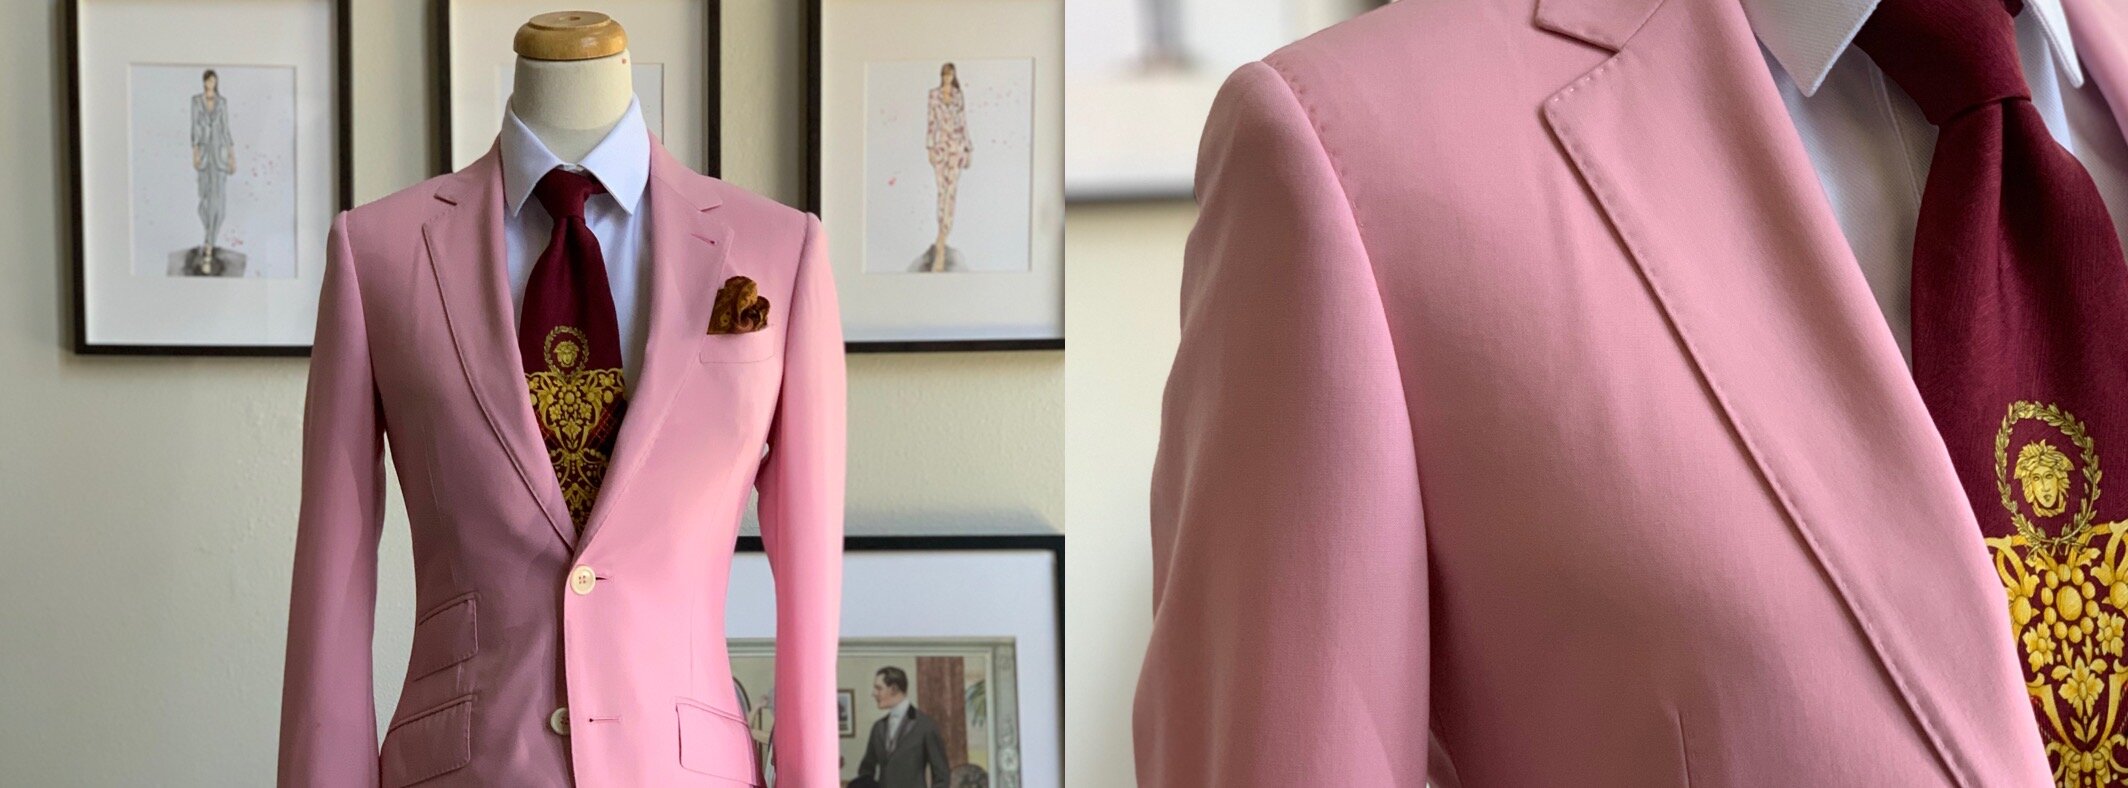 Women's Custom Suits — Bespoke Custom Suits Hand Made in Los Angeles